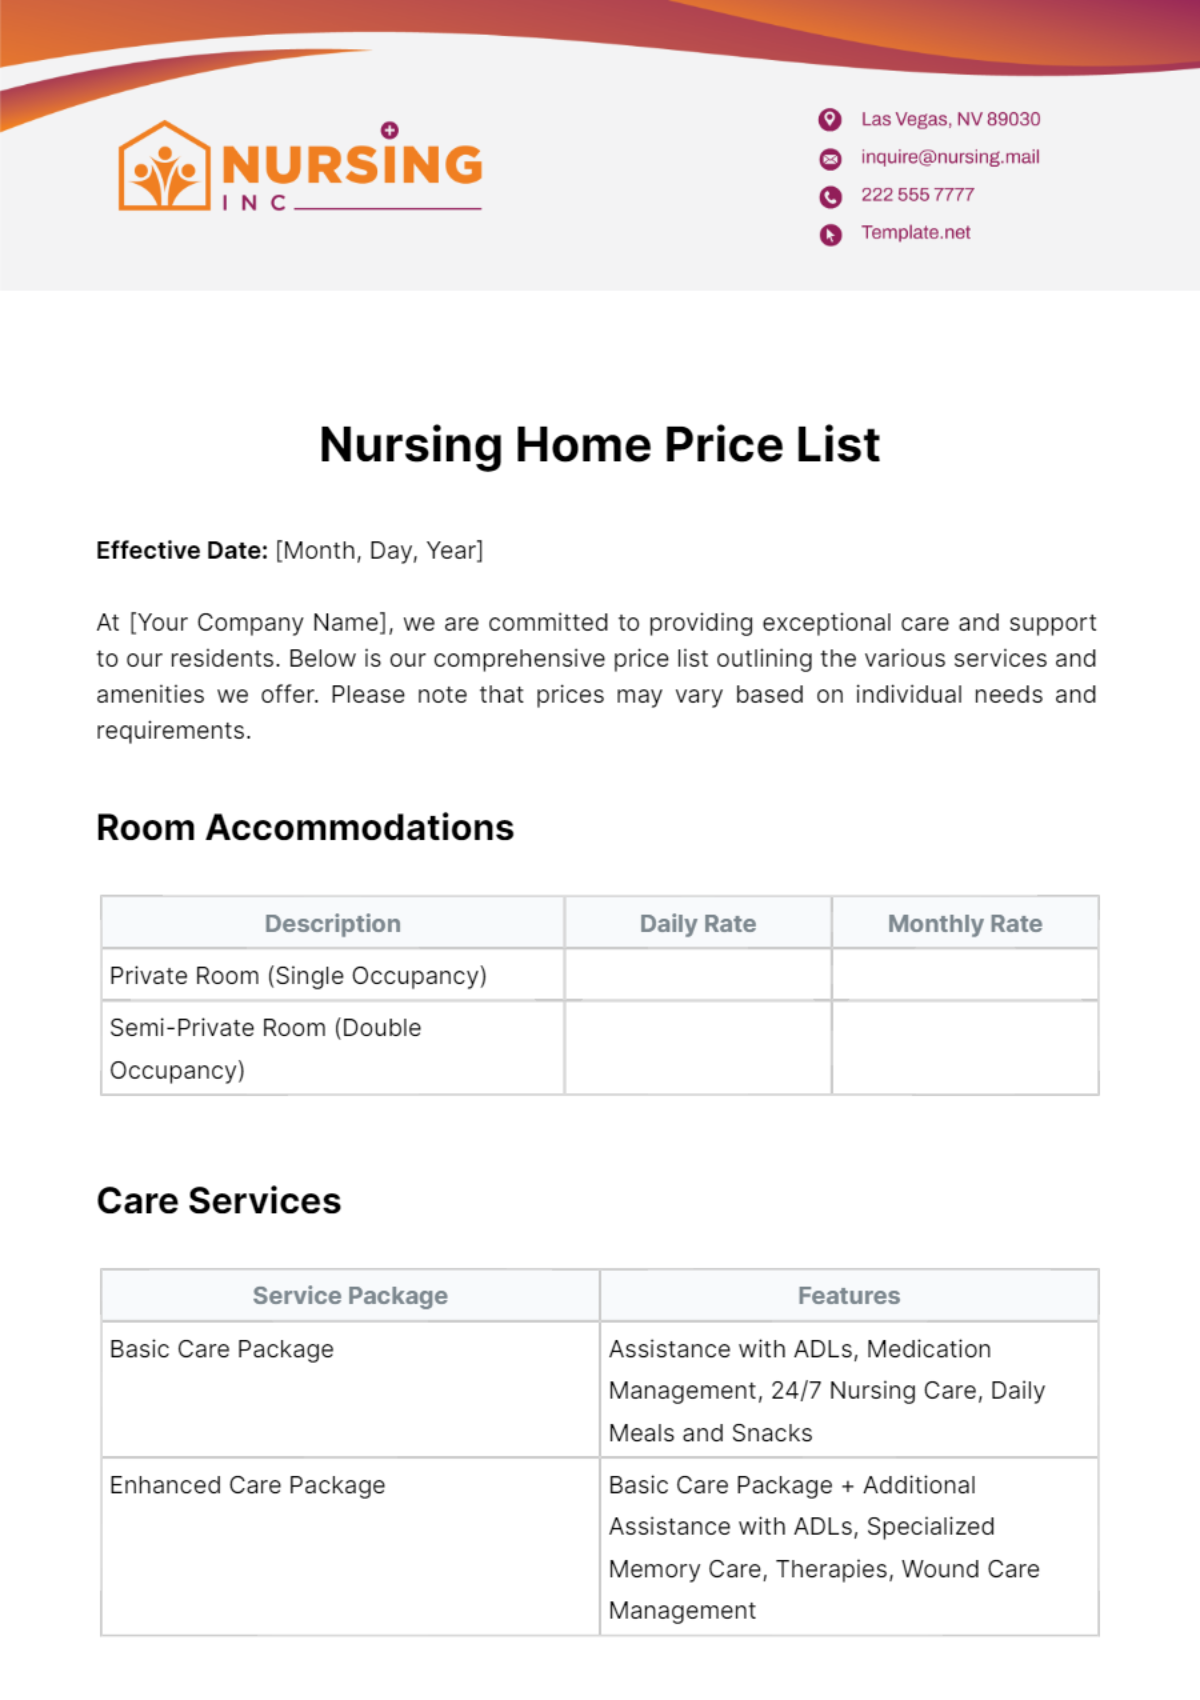 Nursing Home Price List Template